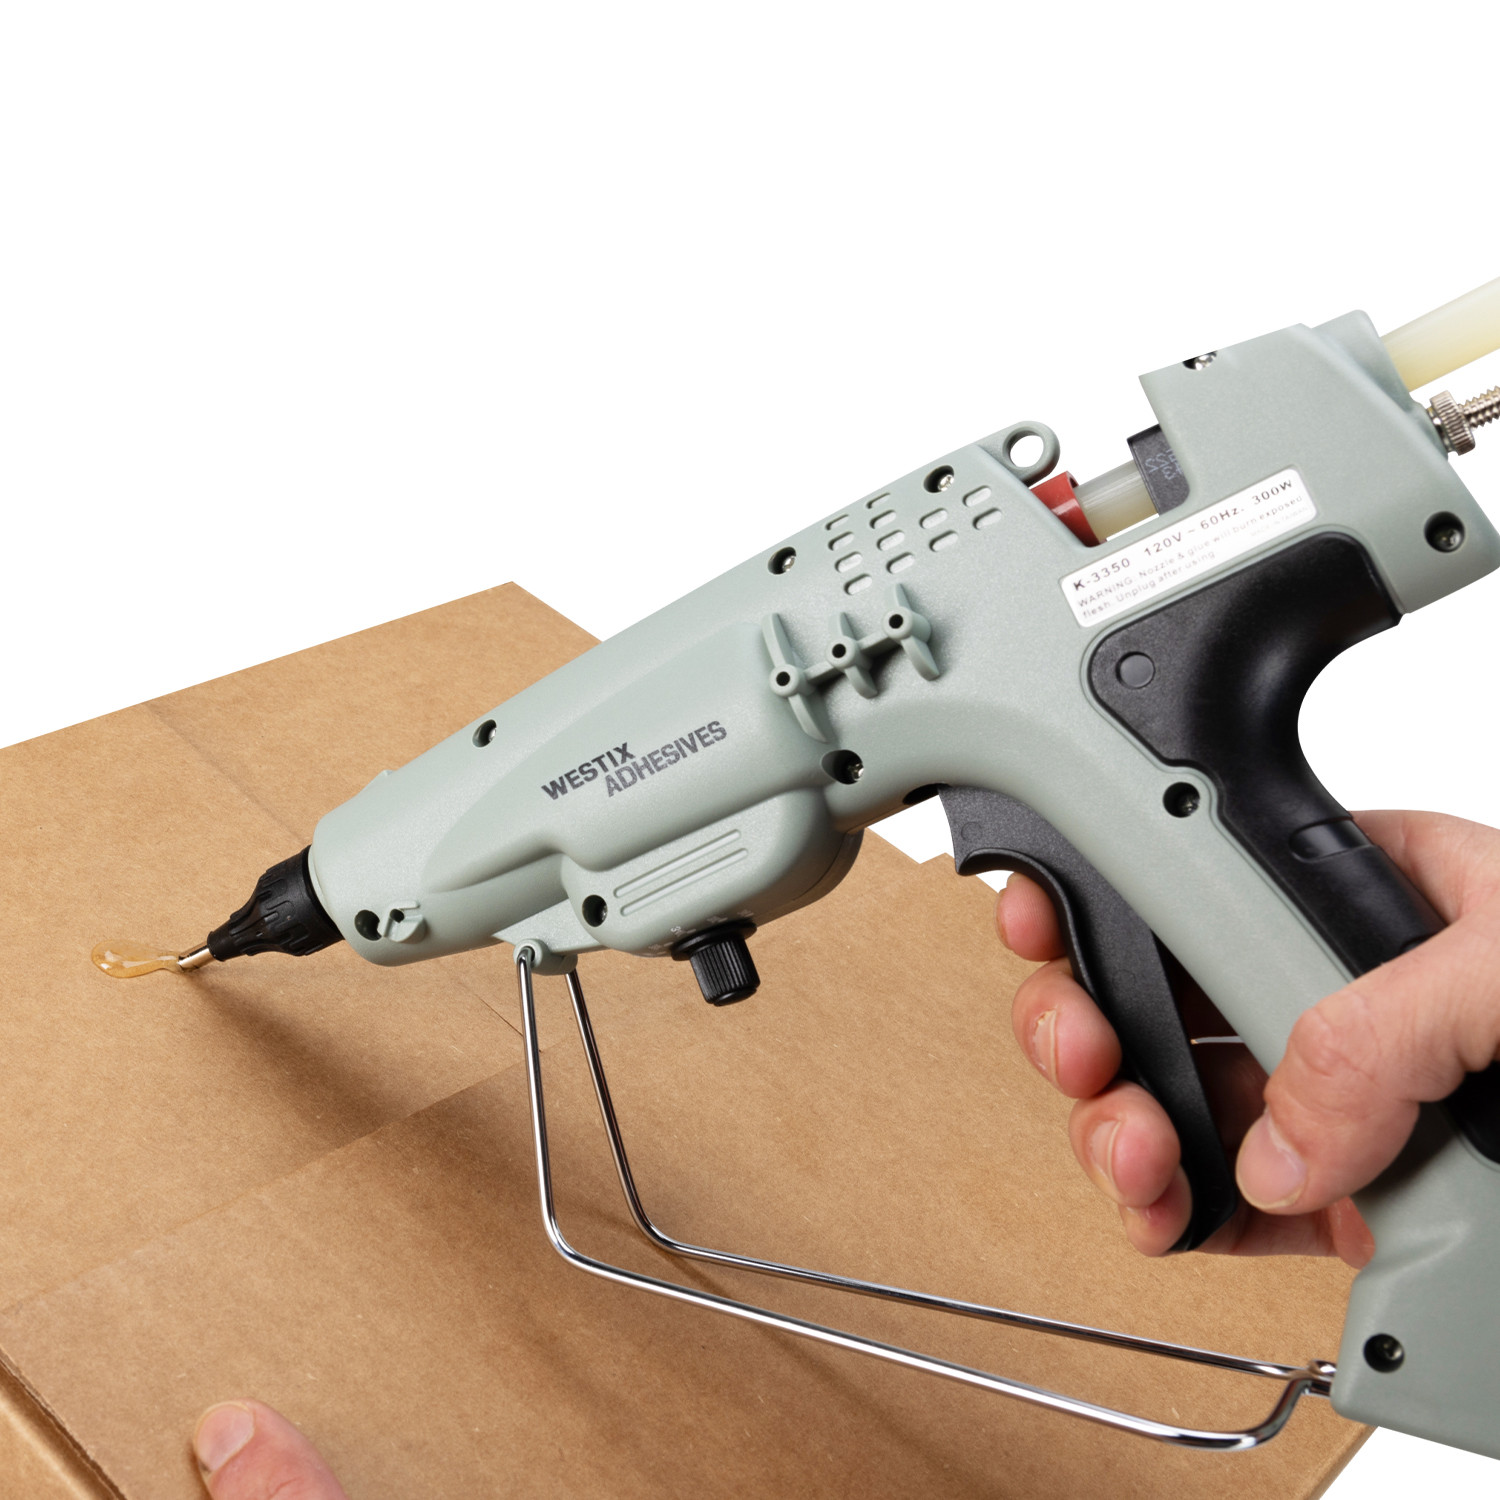 GG-210 Industrial 200W Full Size Hot Glue Gun for 1/2 Glue Sticks